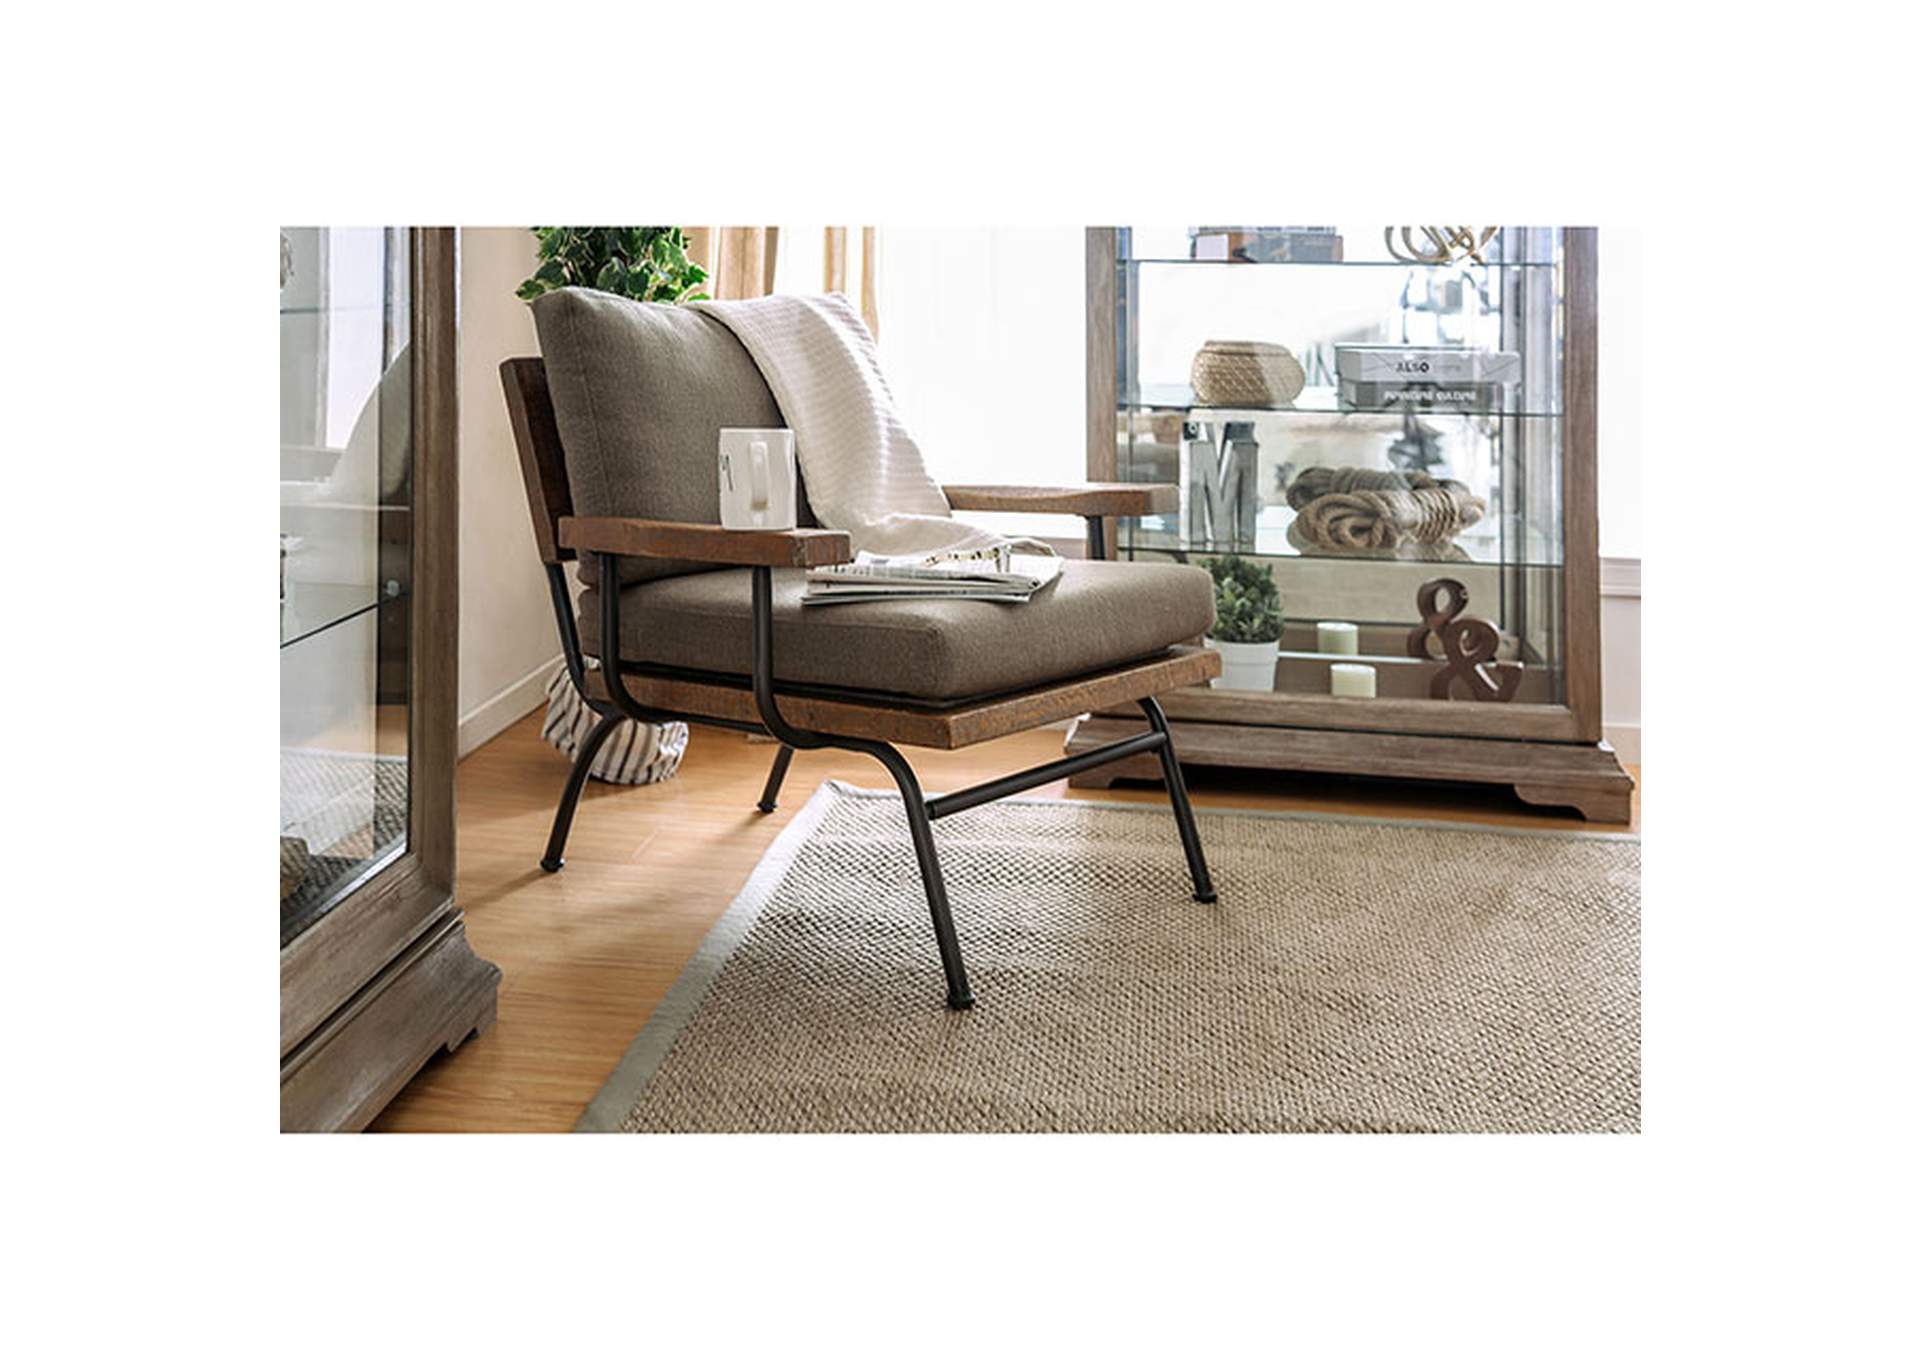 Santiago Accent Chair,Furniture of America